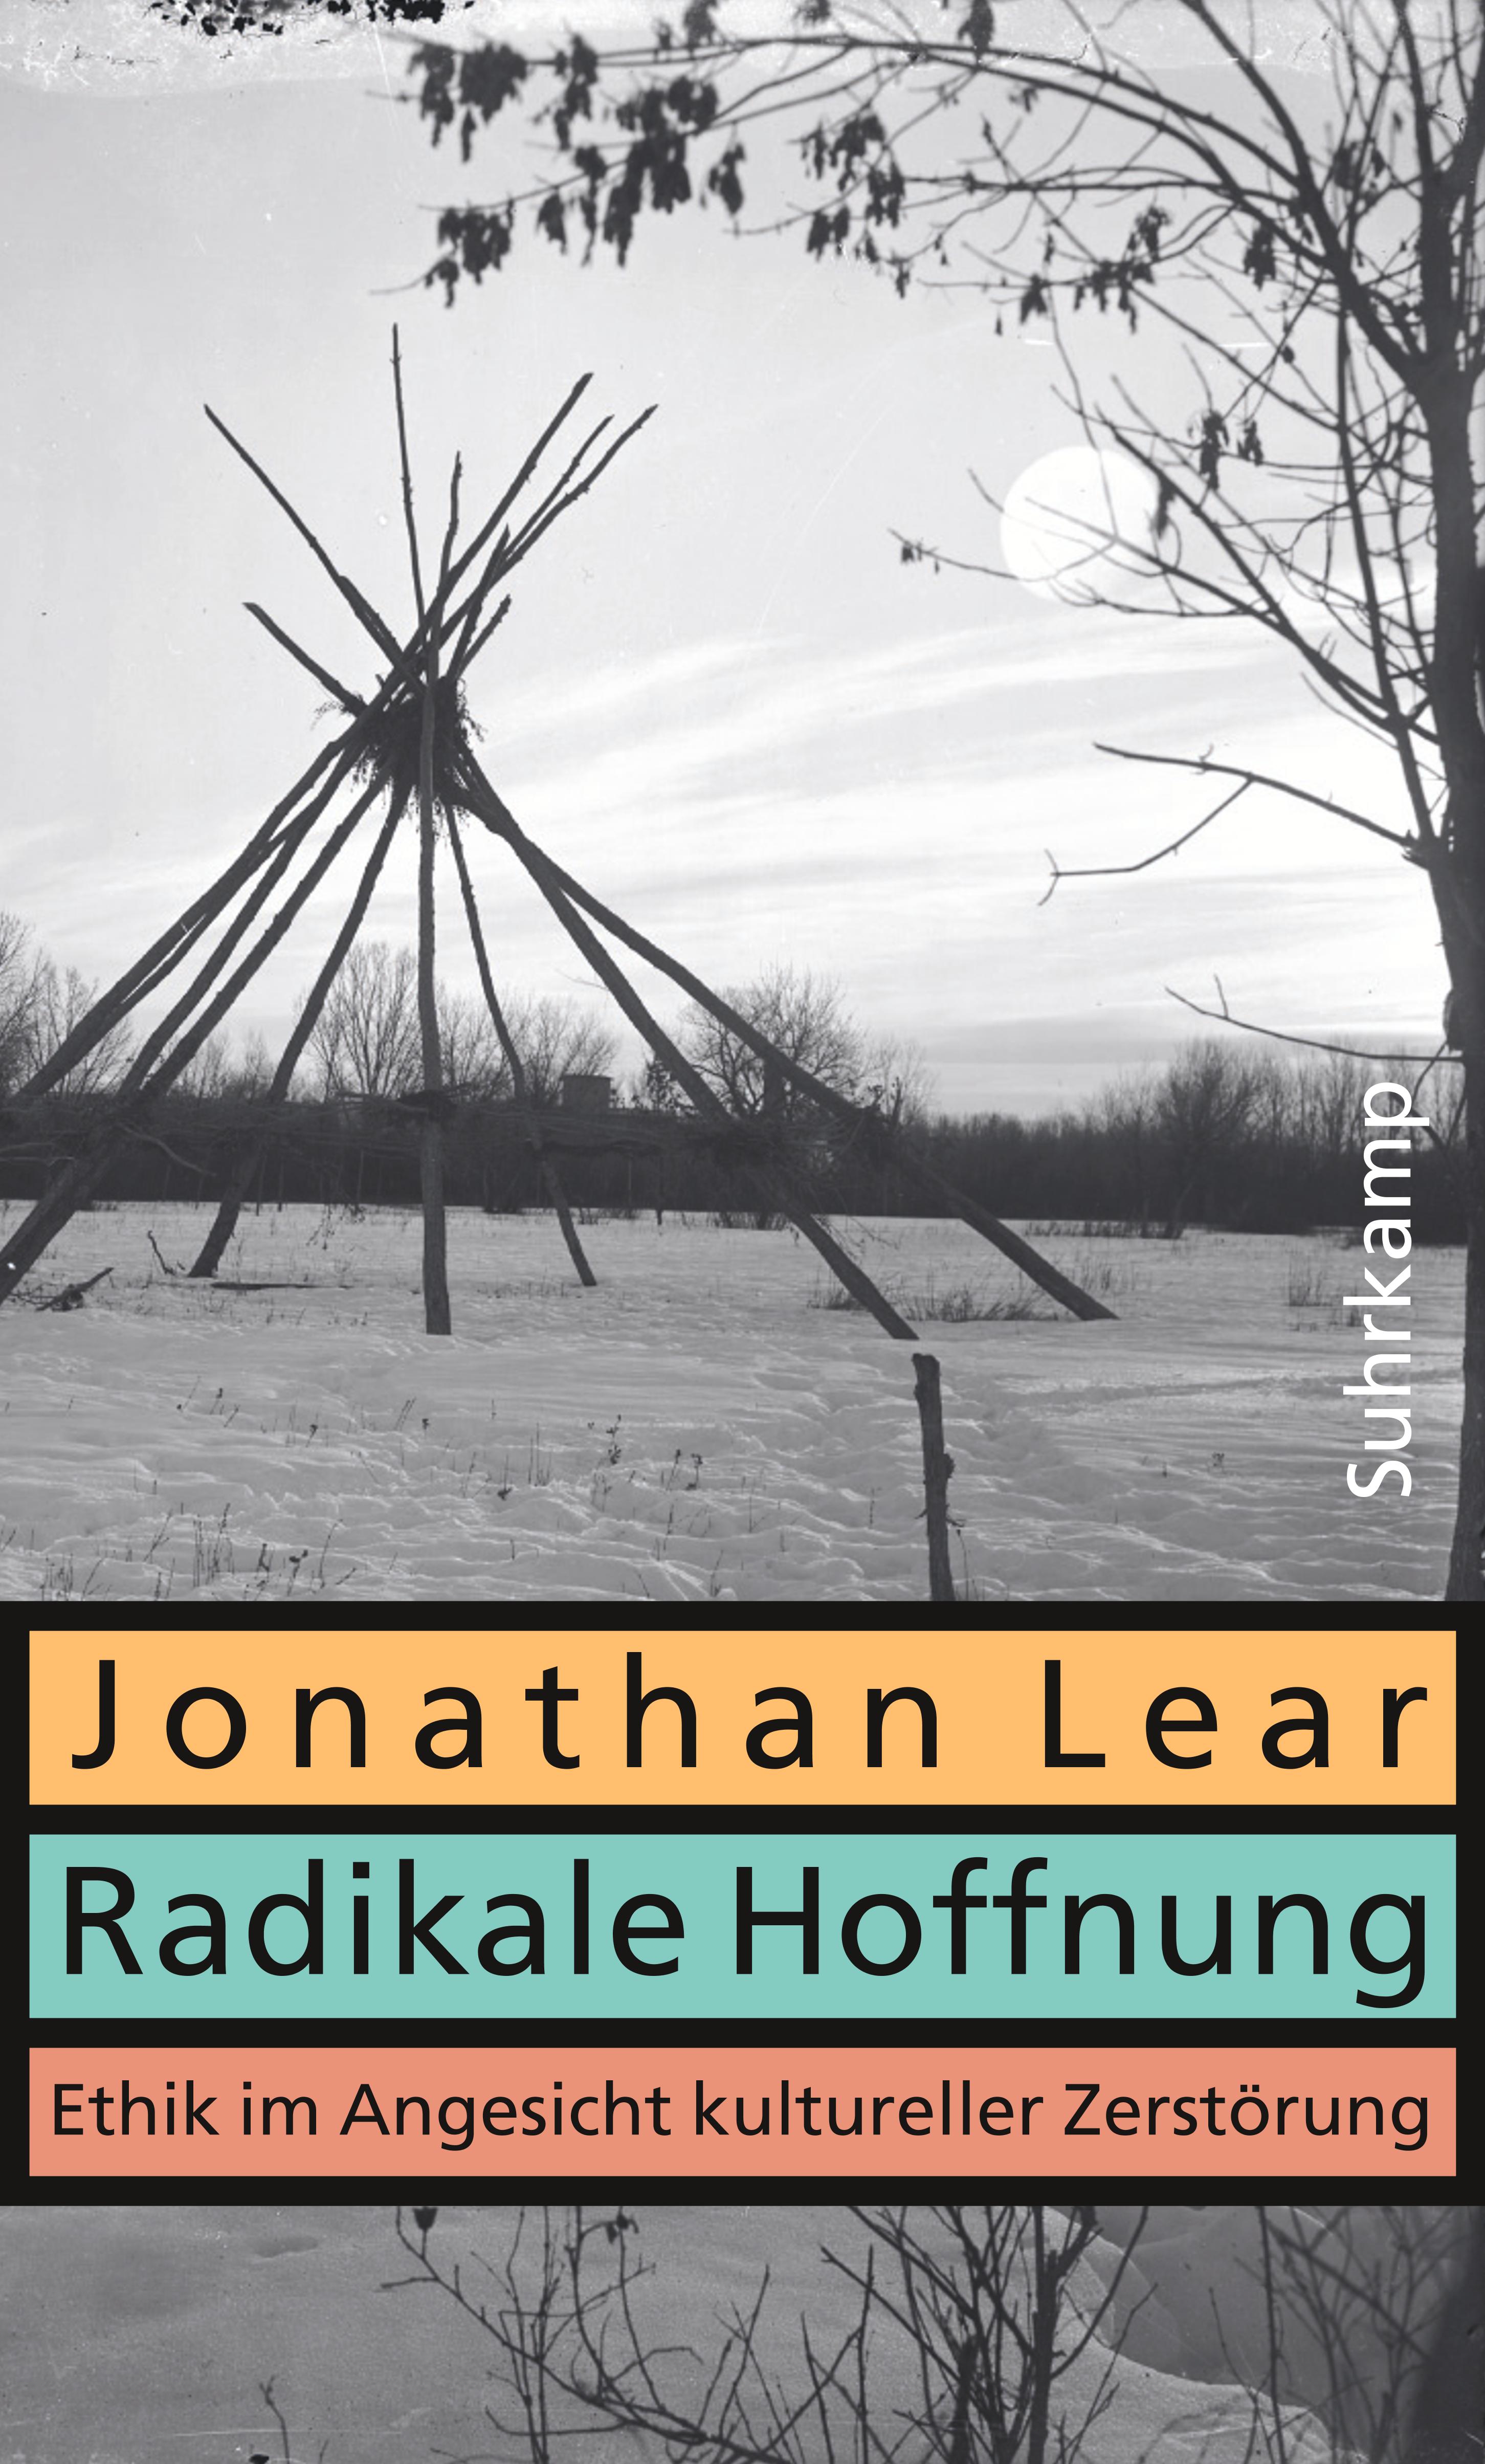 Jonathan Lear: Radikale Hoffnung (Hardcover, Deutsch language, 2019, Suhrkamp)